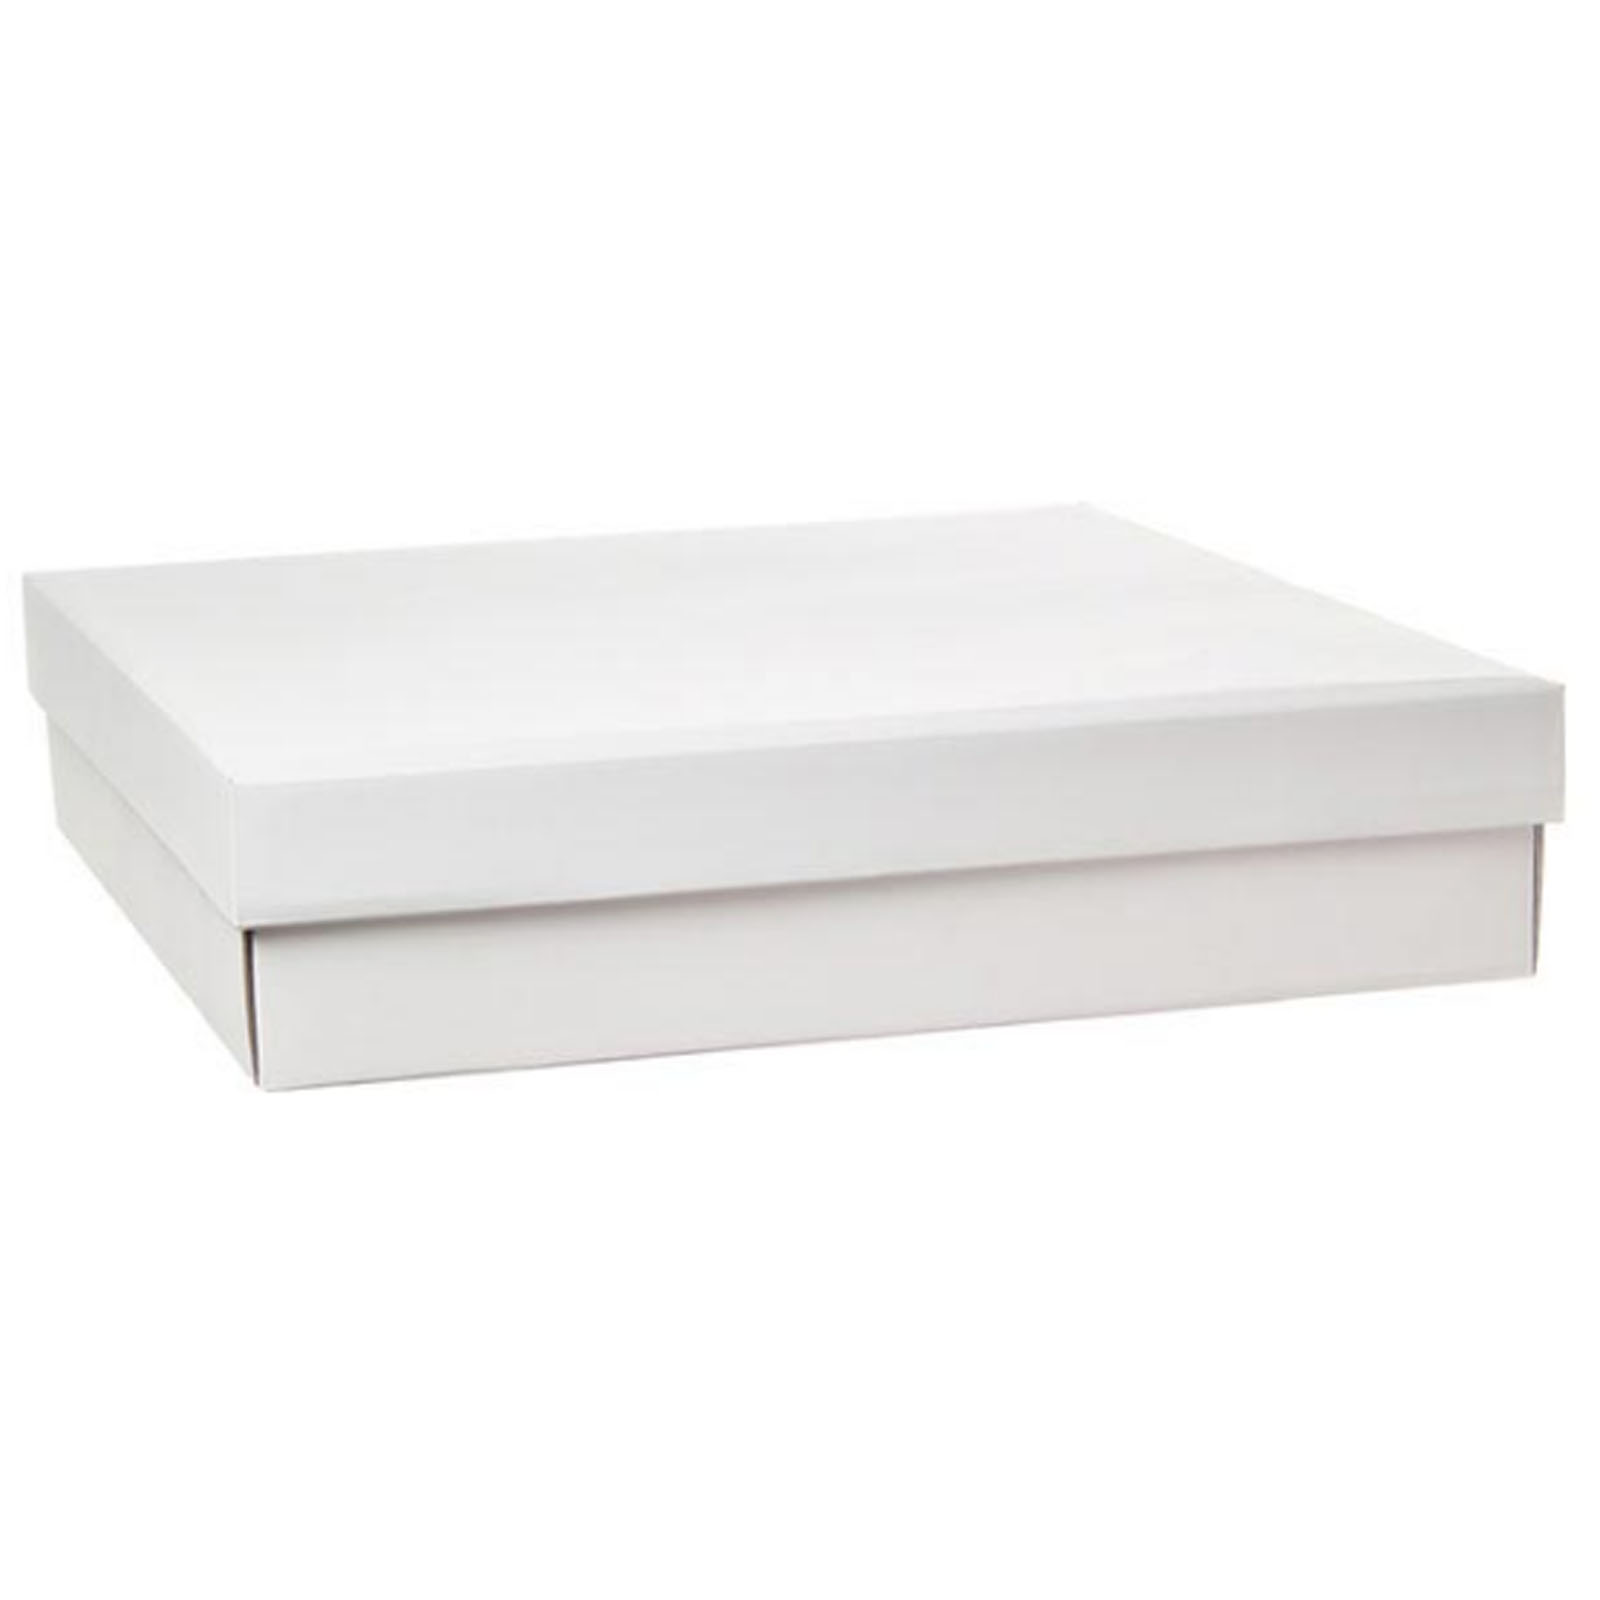 Wedding and Christening Square Box White (50x50x11cmH) - Acrylic Online ...